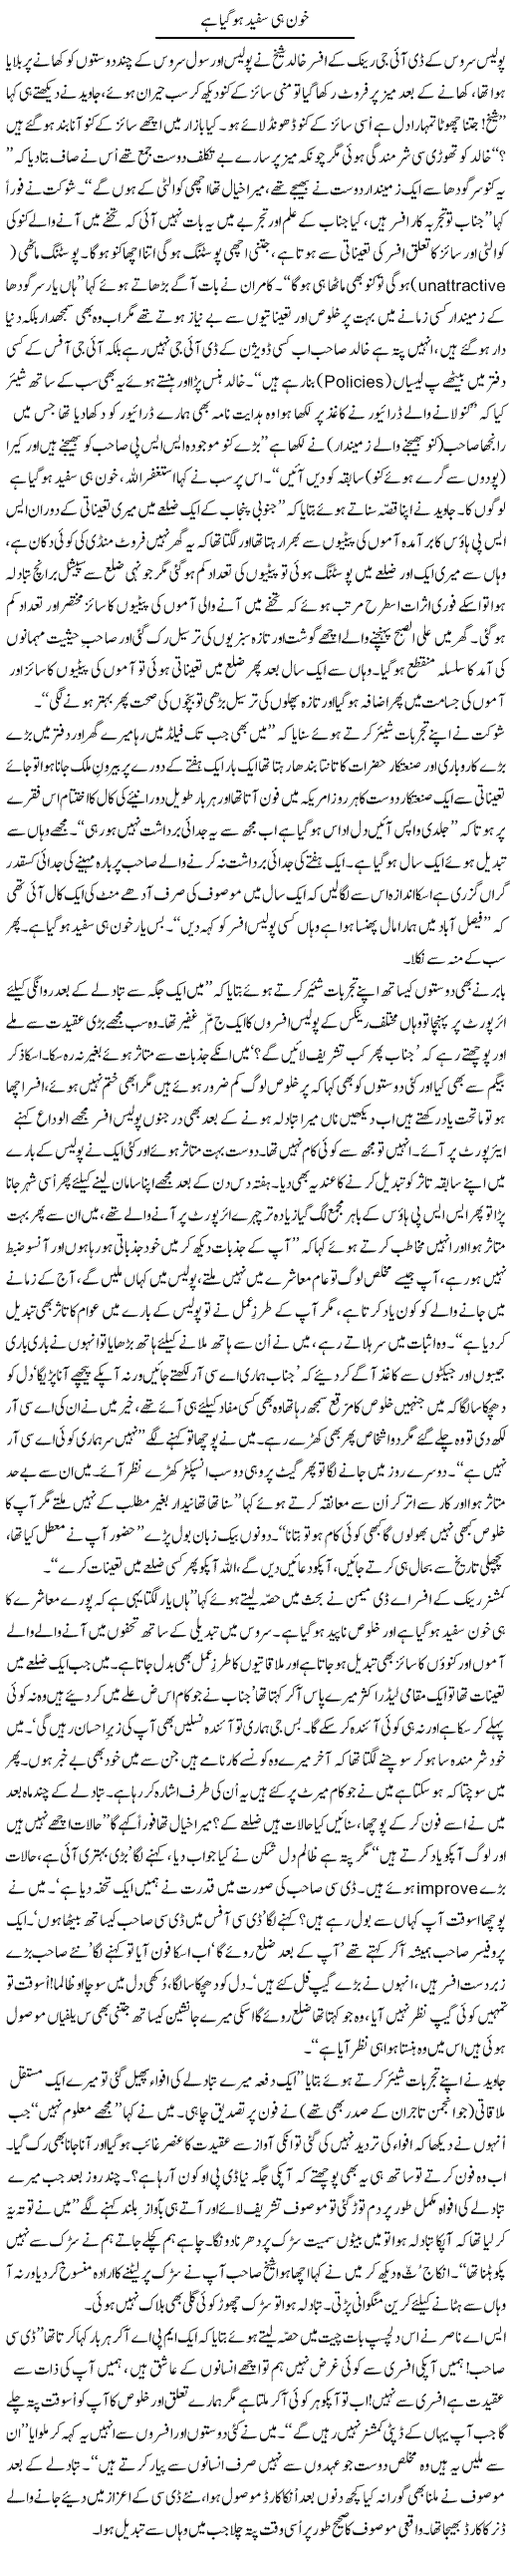 Khoon Hi Safaid Ho Gaya Hai | Zulfiqar Ahmed Cheema | Daily Urdu Columns